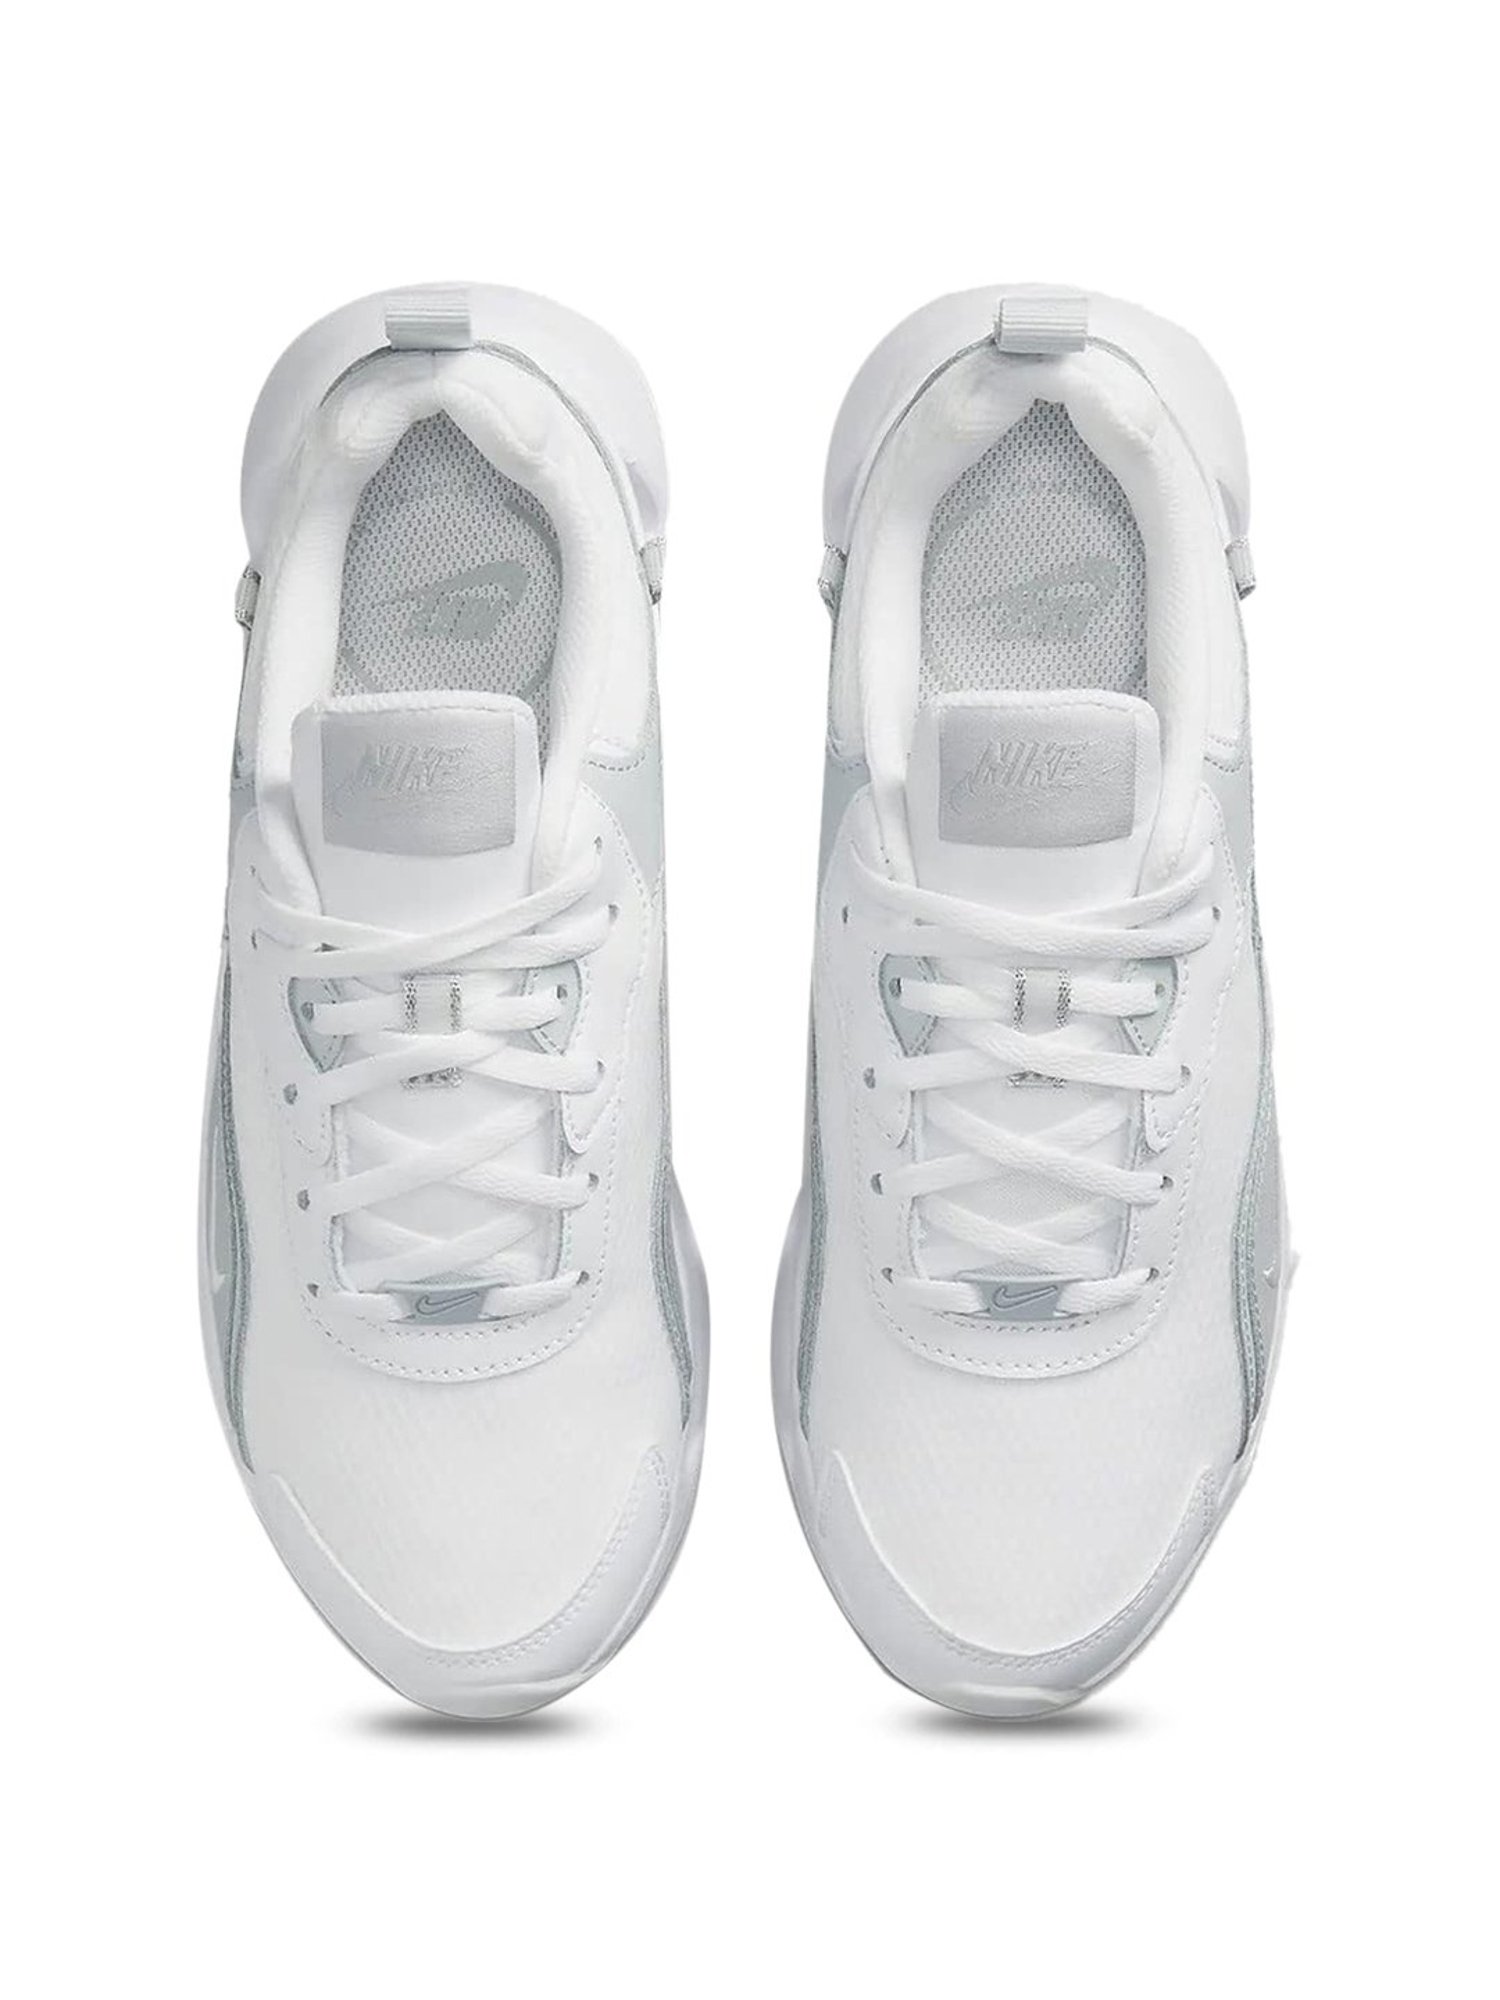 Nike RYZ 365 2 White Shoes